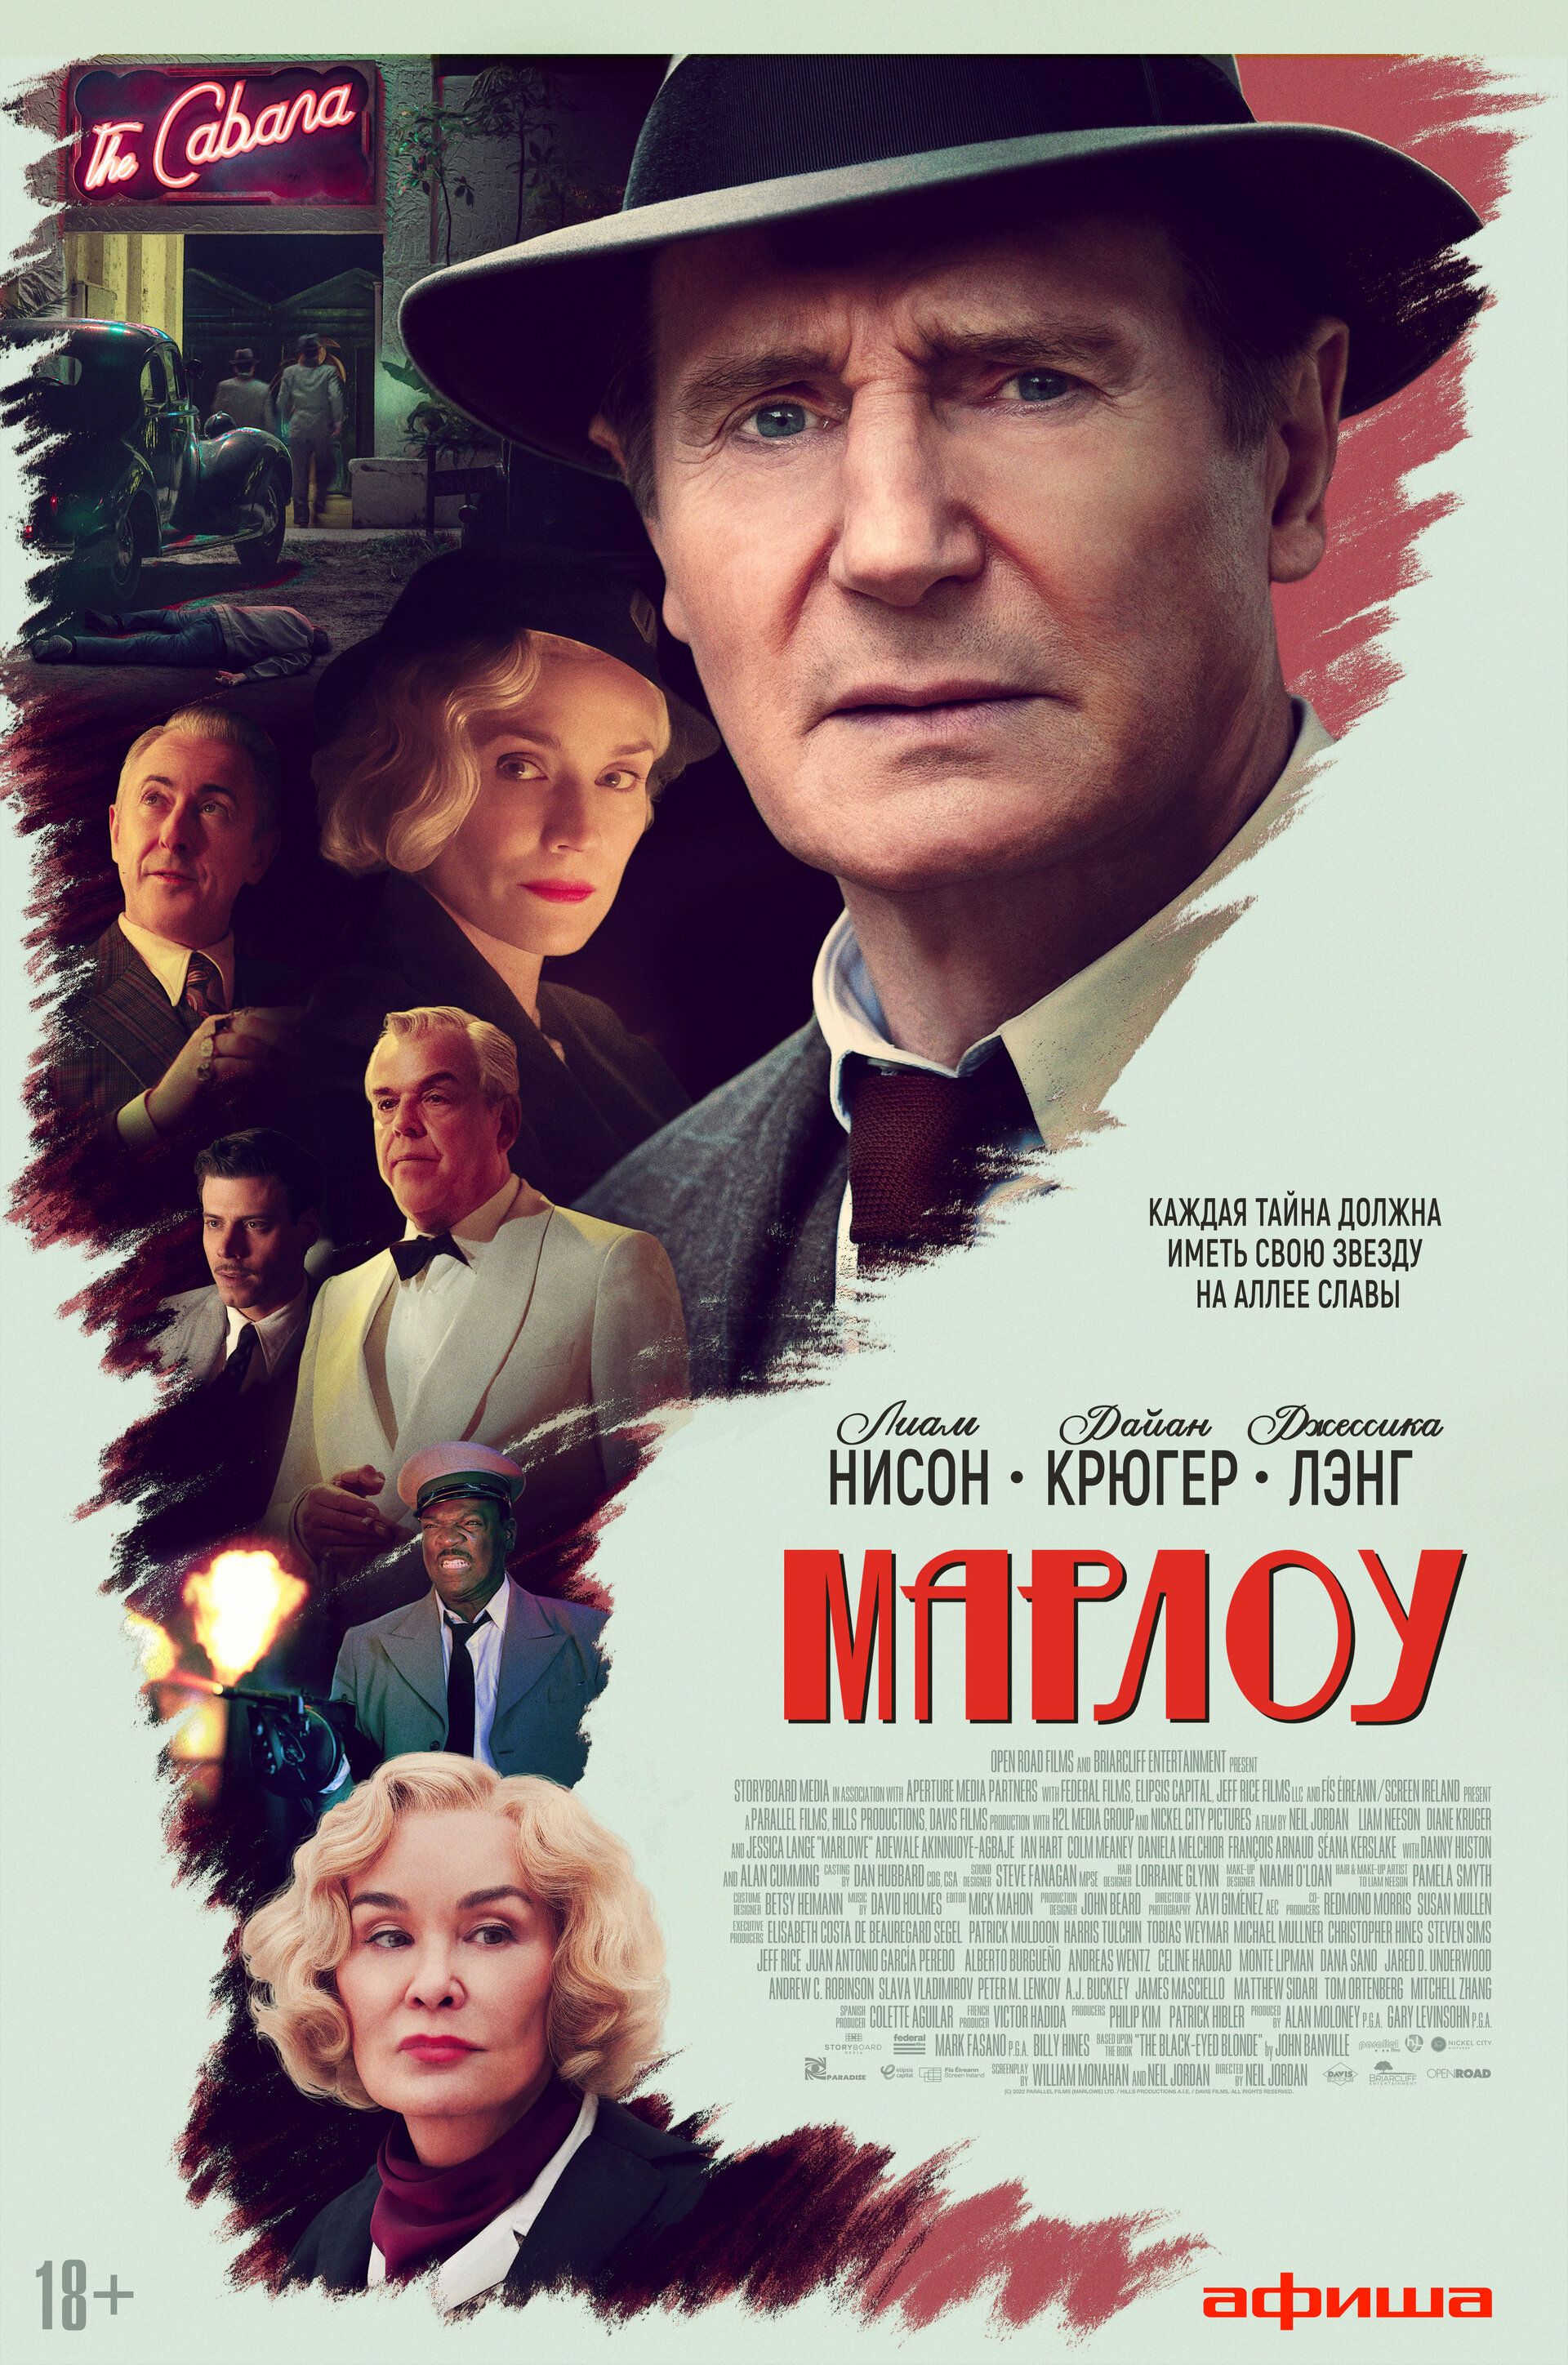 Постер к фильму Марлоу / Marlowe (2022) UHD WEB-DL 2160p от селезень | 4K | HDR | HDR10+ | D, P